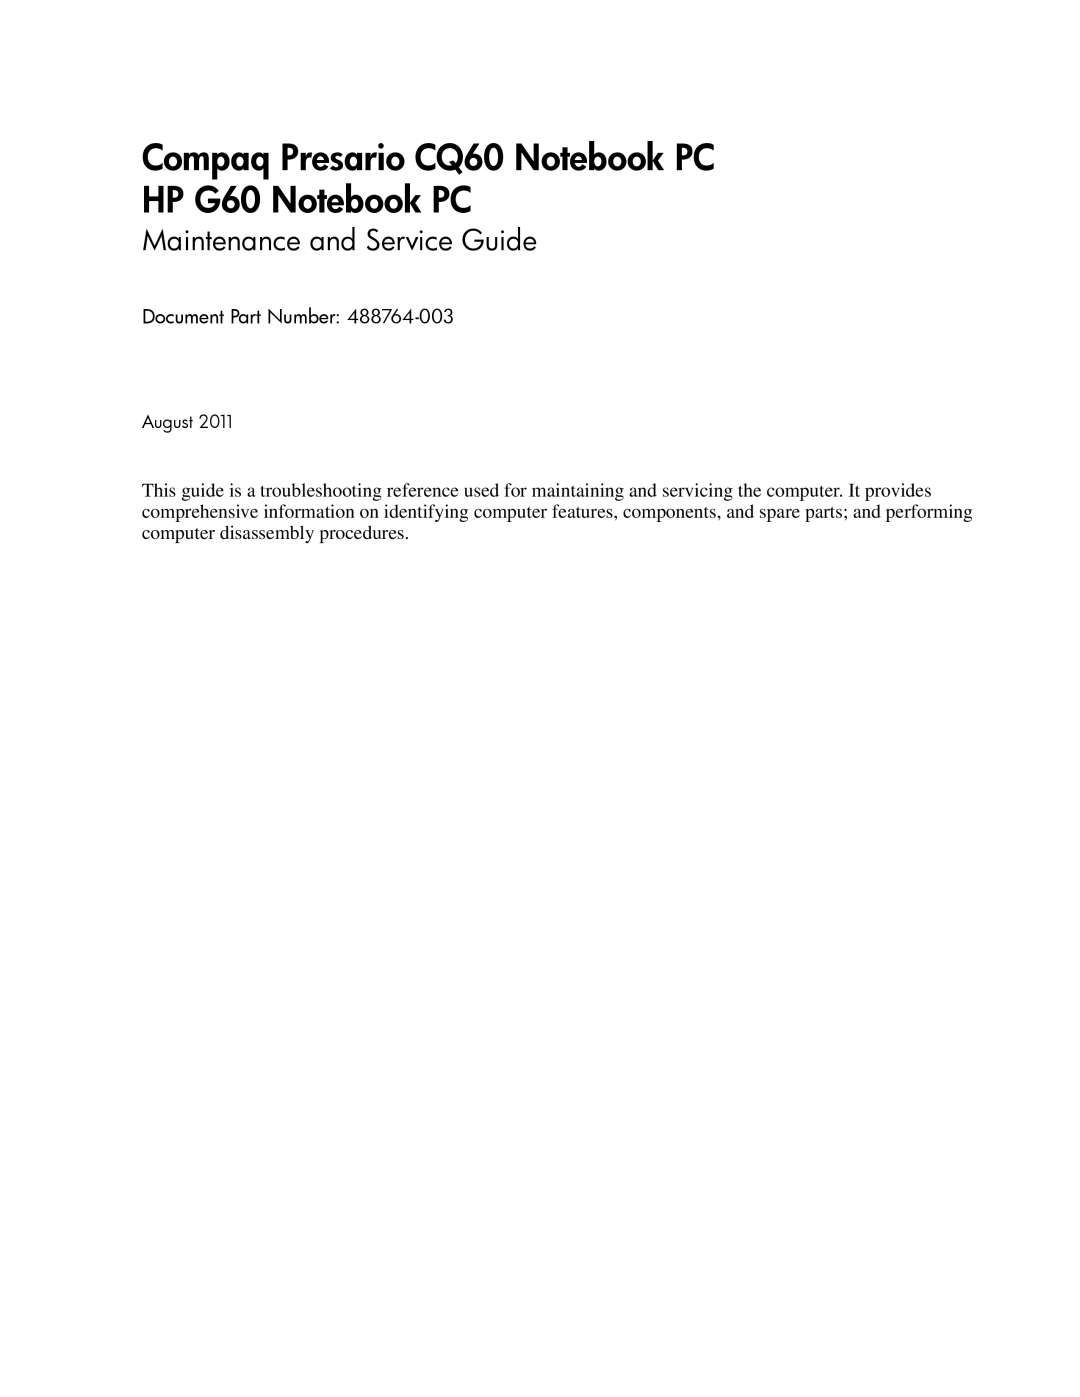 HP CQ60-110AU, CQ60-109TX manual Compaq Presario CQ60 Notebook PC HP G60 Notebook PC, Maintenance and Service Guide 